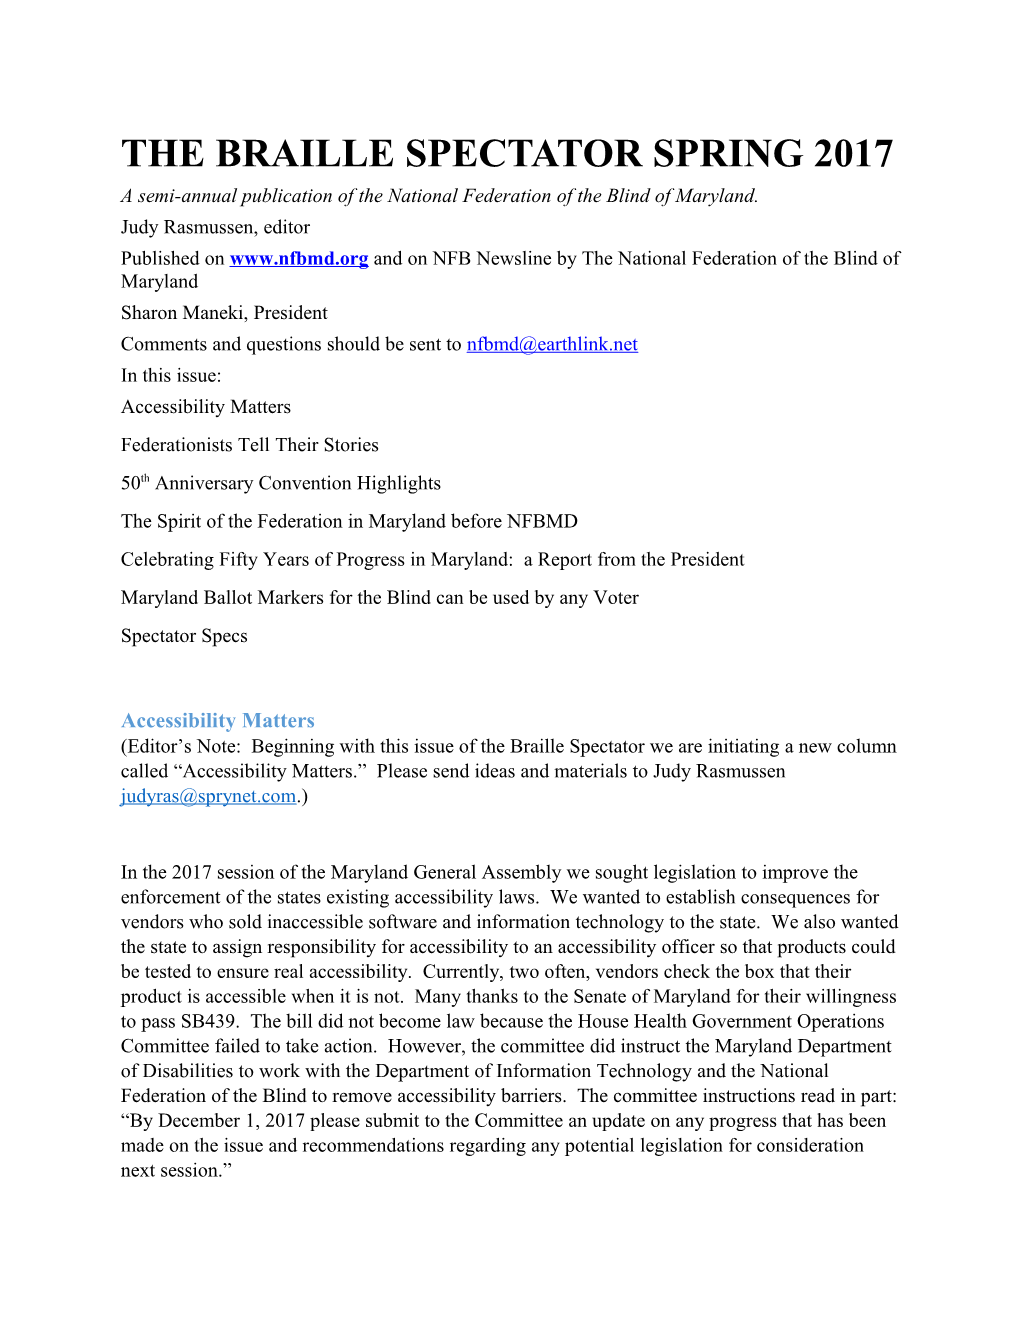 The Braille Spectator Spring 2017